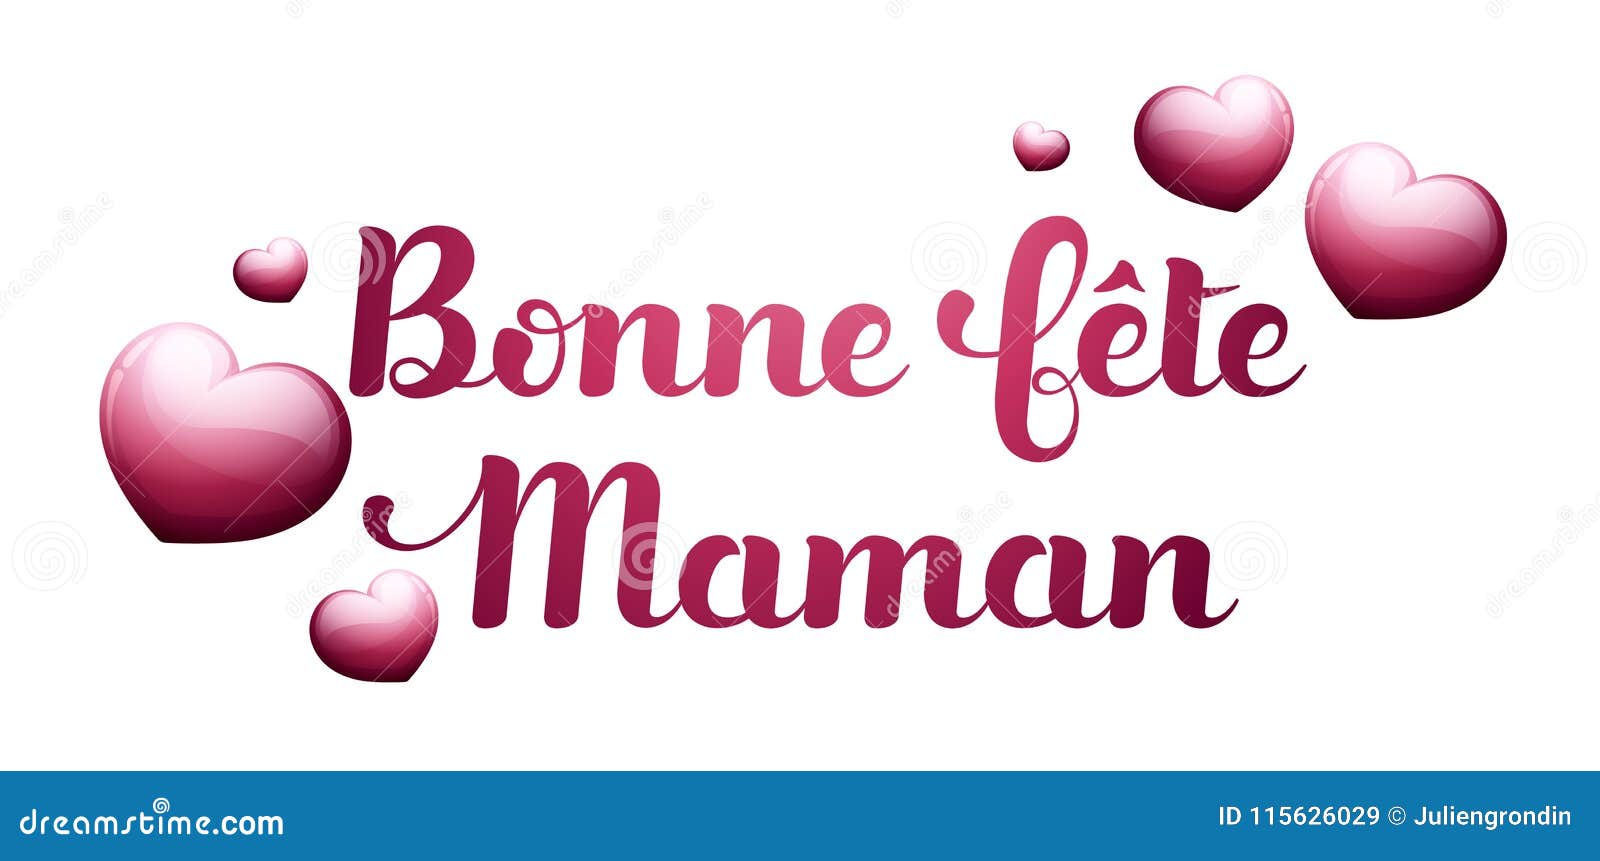 happy motherÃ¢â¬â¢s day in french : bonne fÃÂªte maman